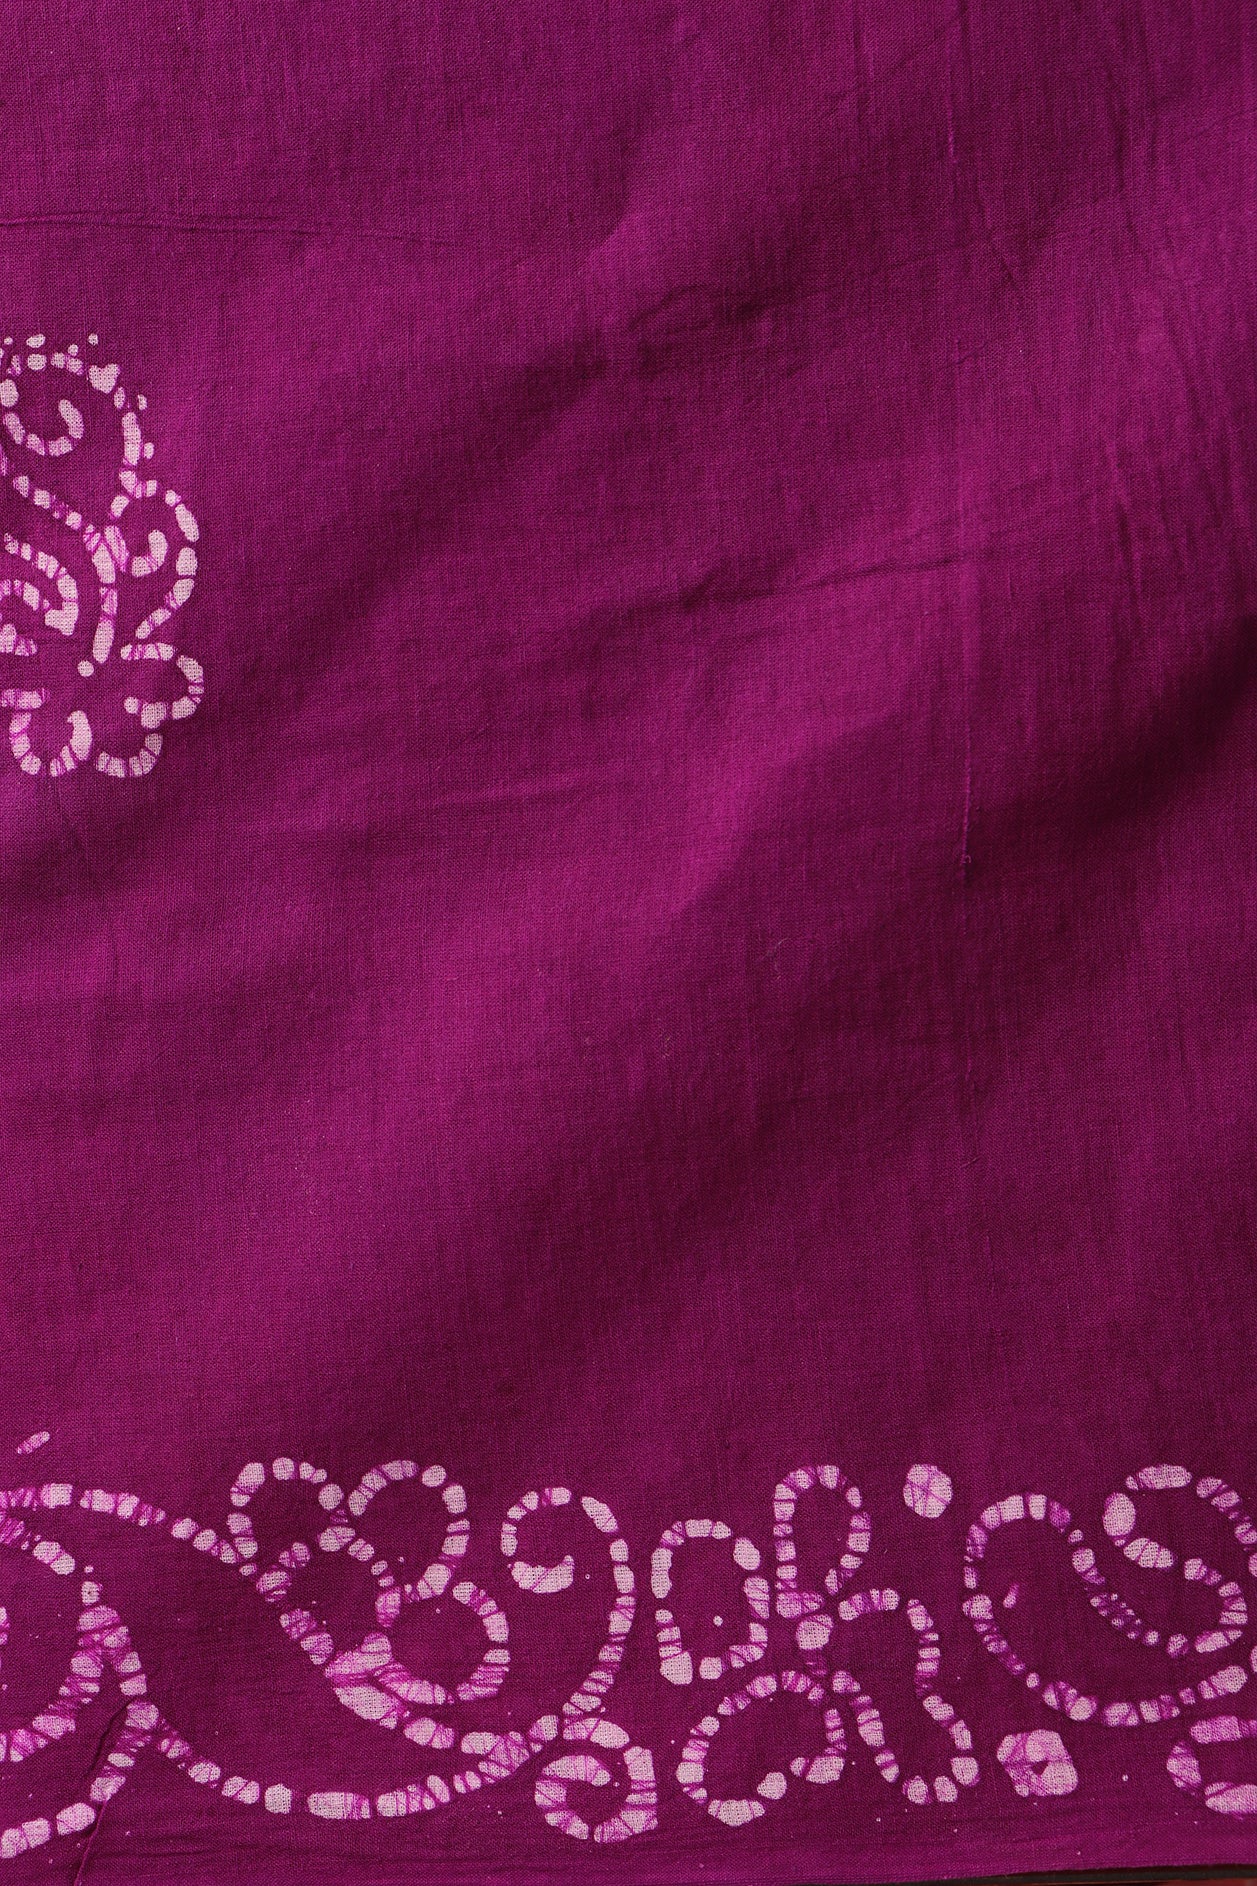 Floral Motif Batik Work With Dark Violet Sungudi Cotton Saree